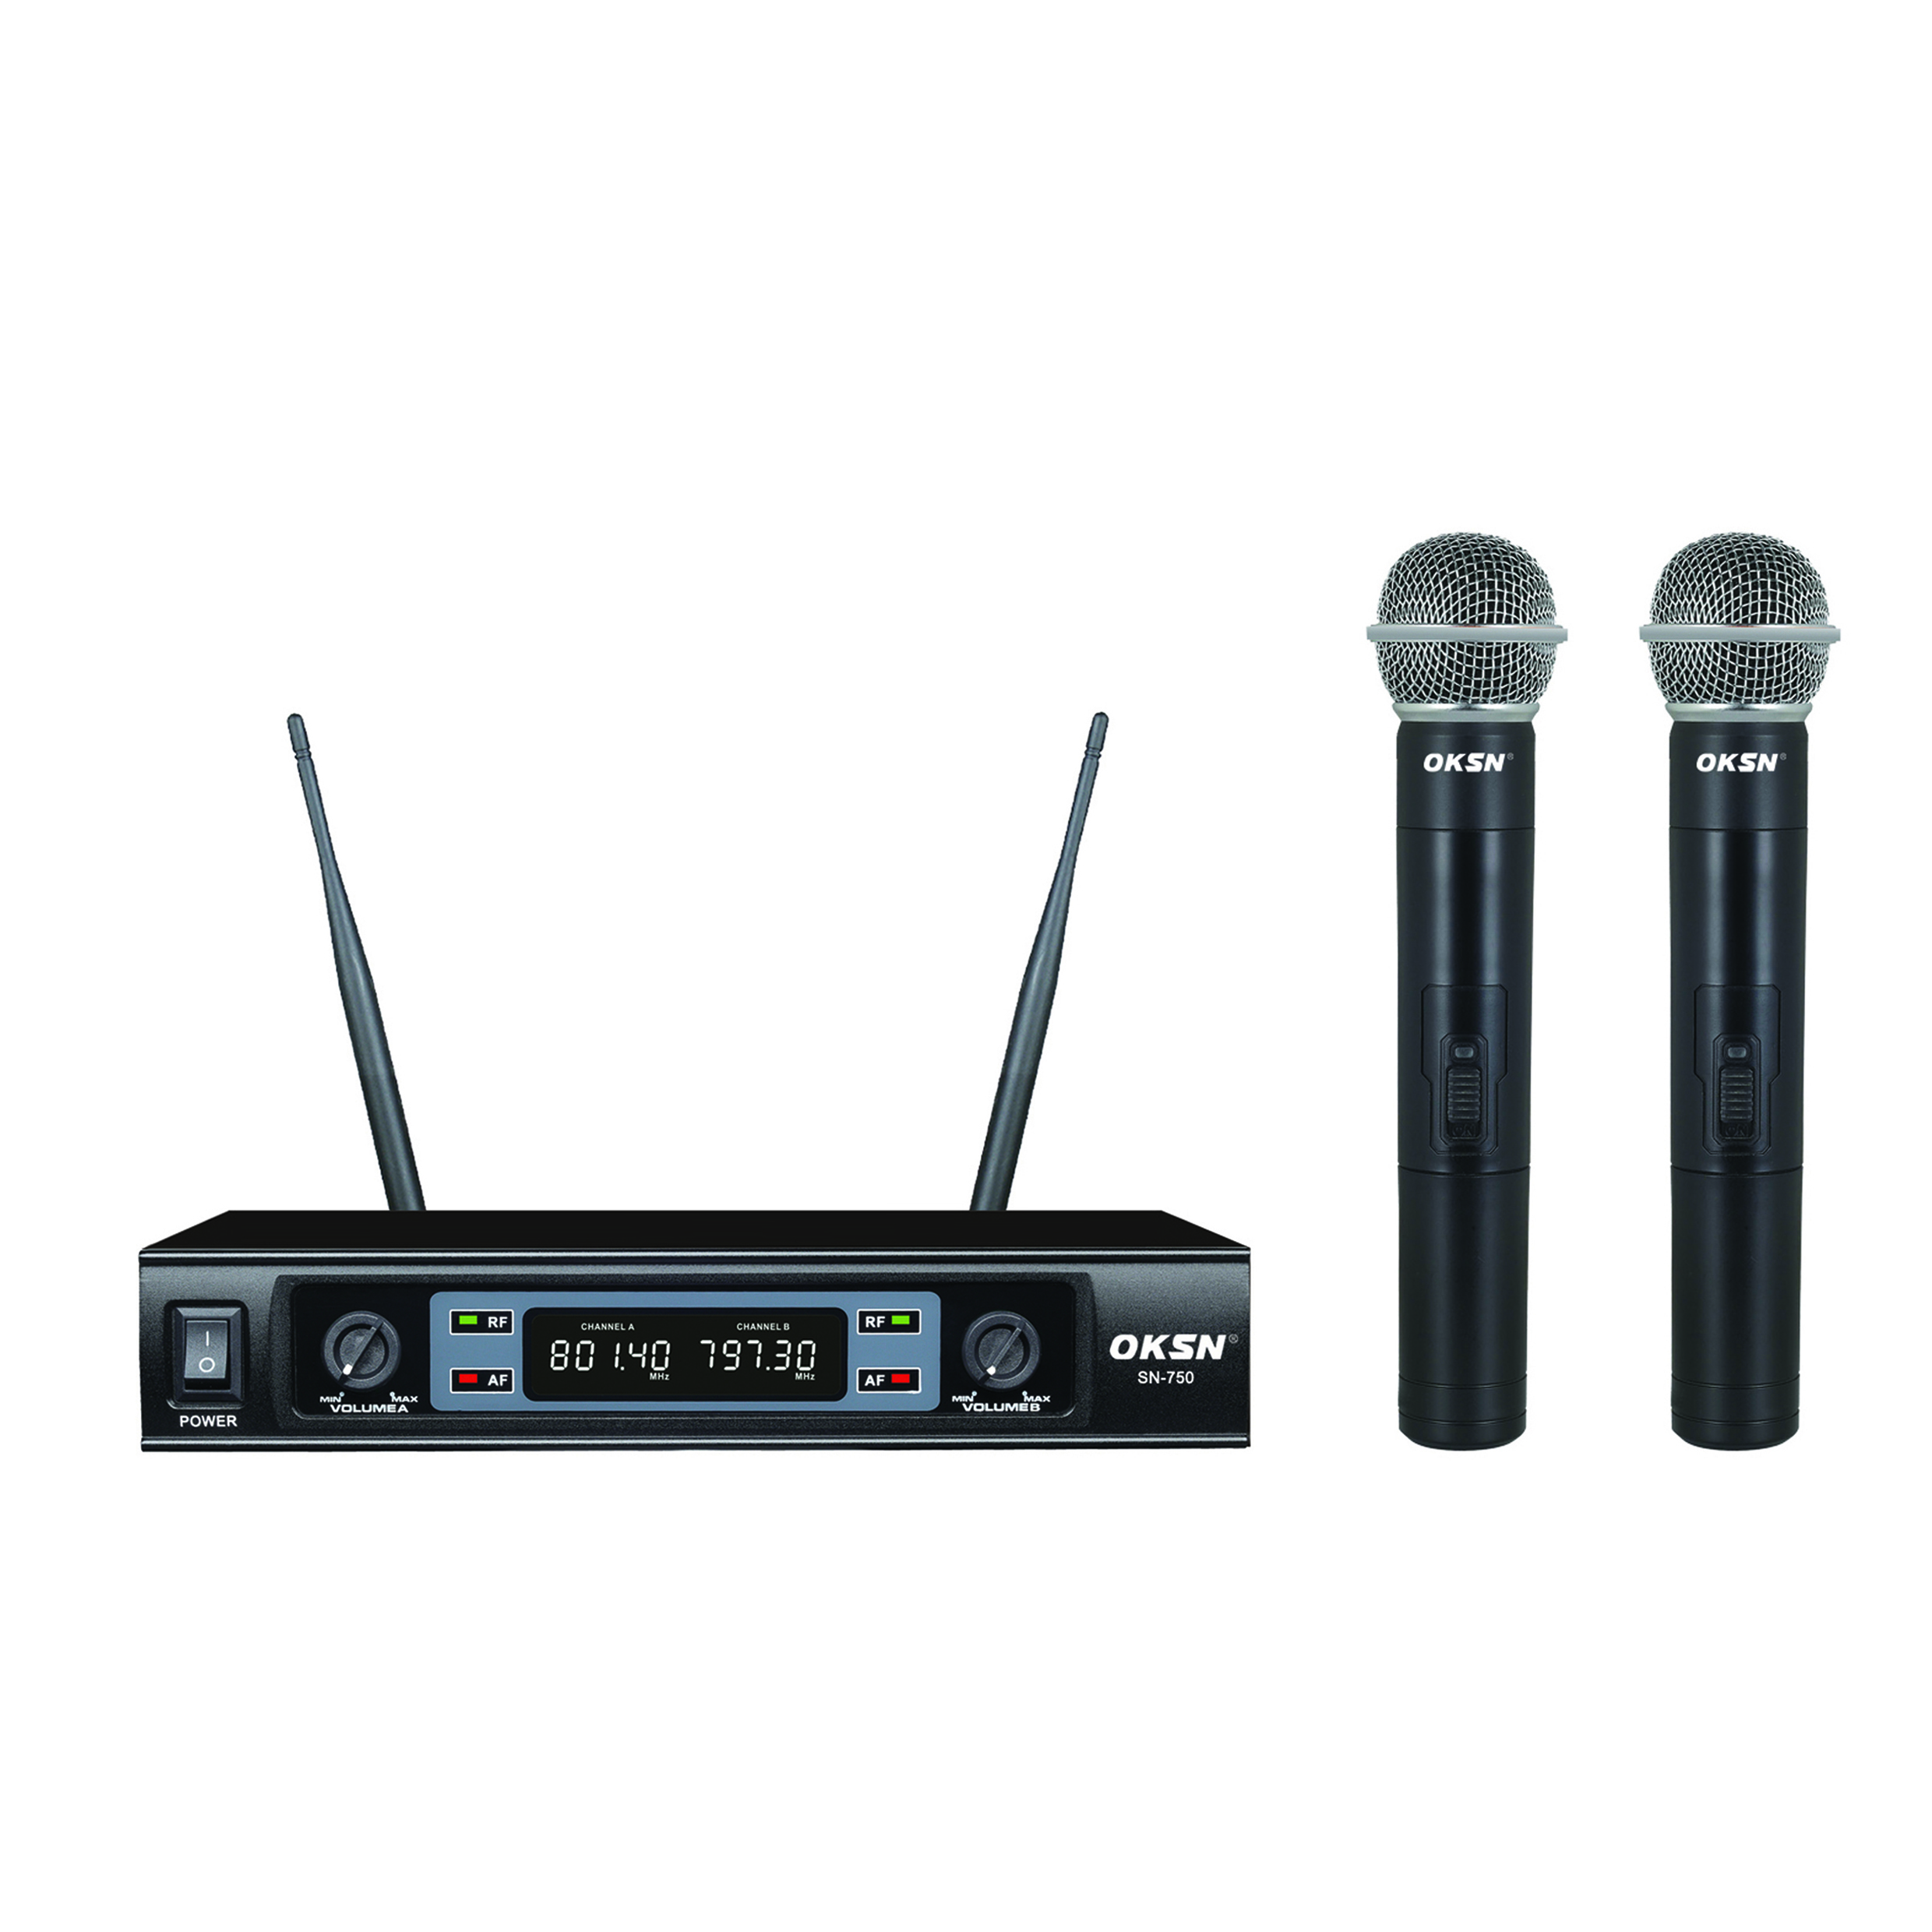 SN-750 Enping Karaoke Musical Microphone 